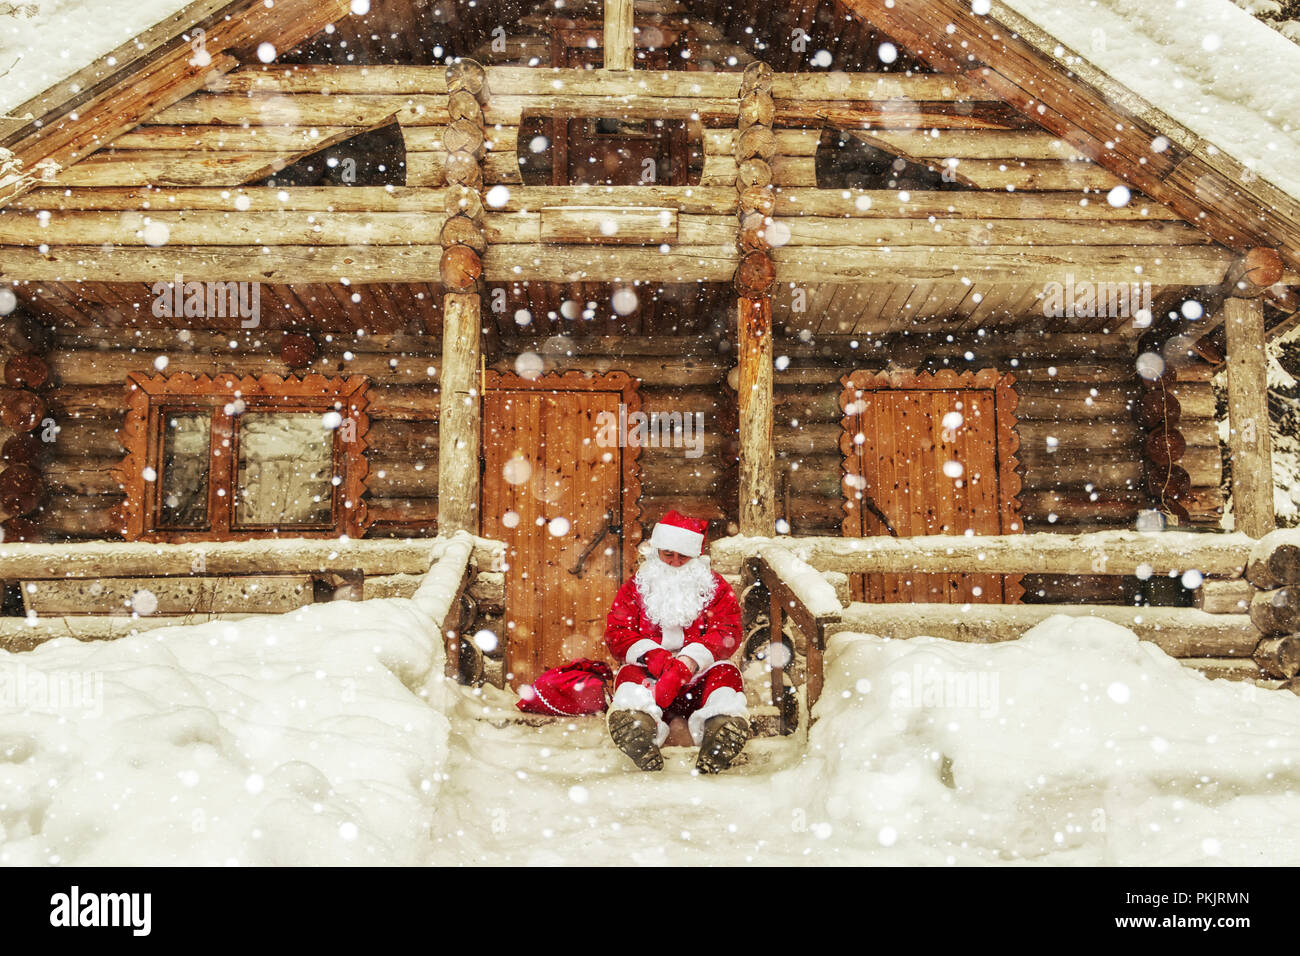 The daily life of Santa Claus. Home of Santa Claus at the North Pole. Stock Photo